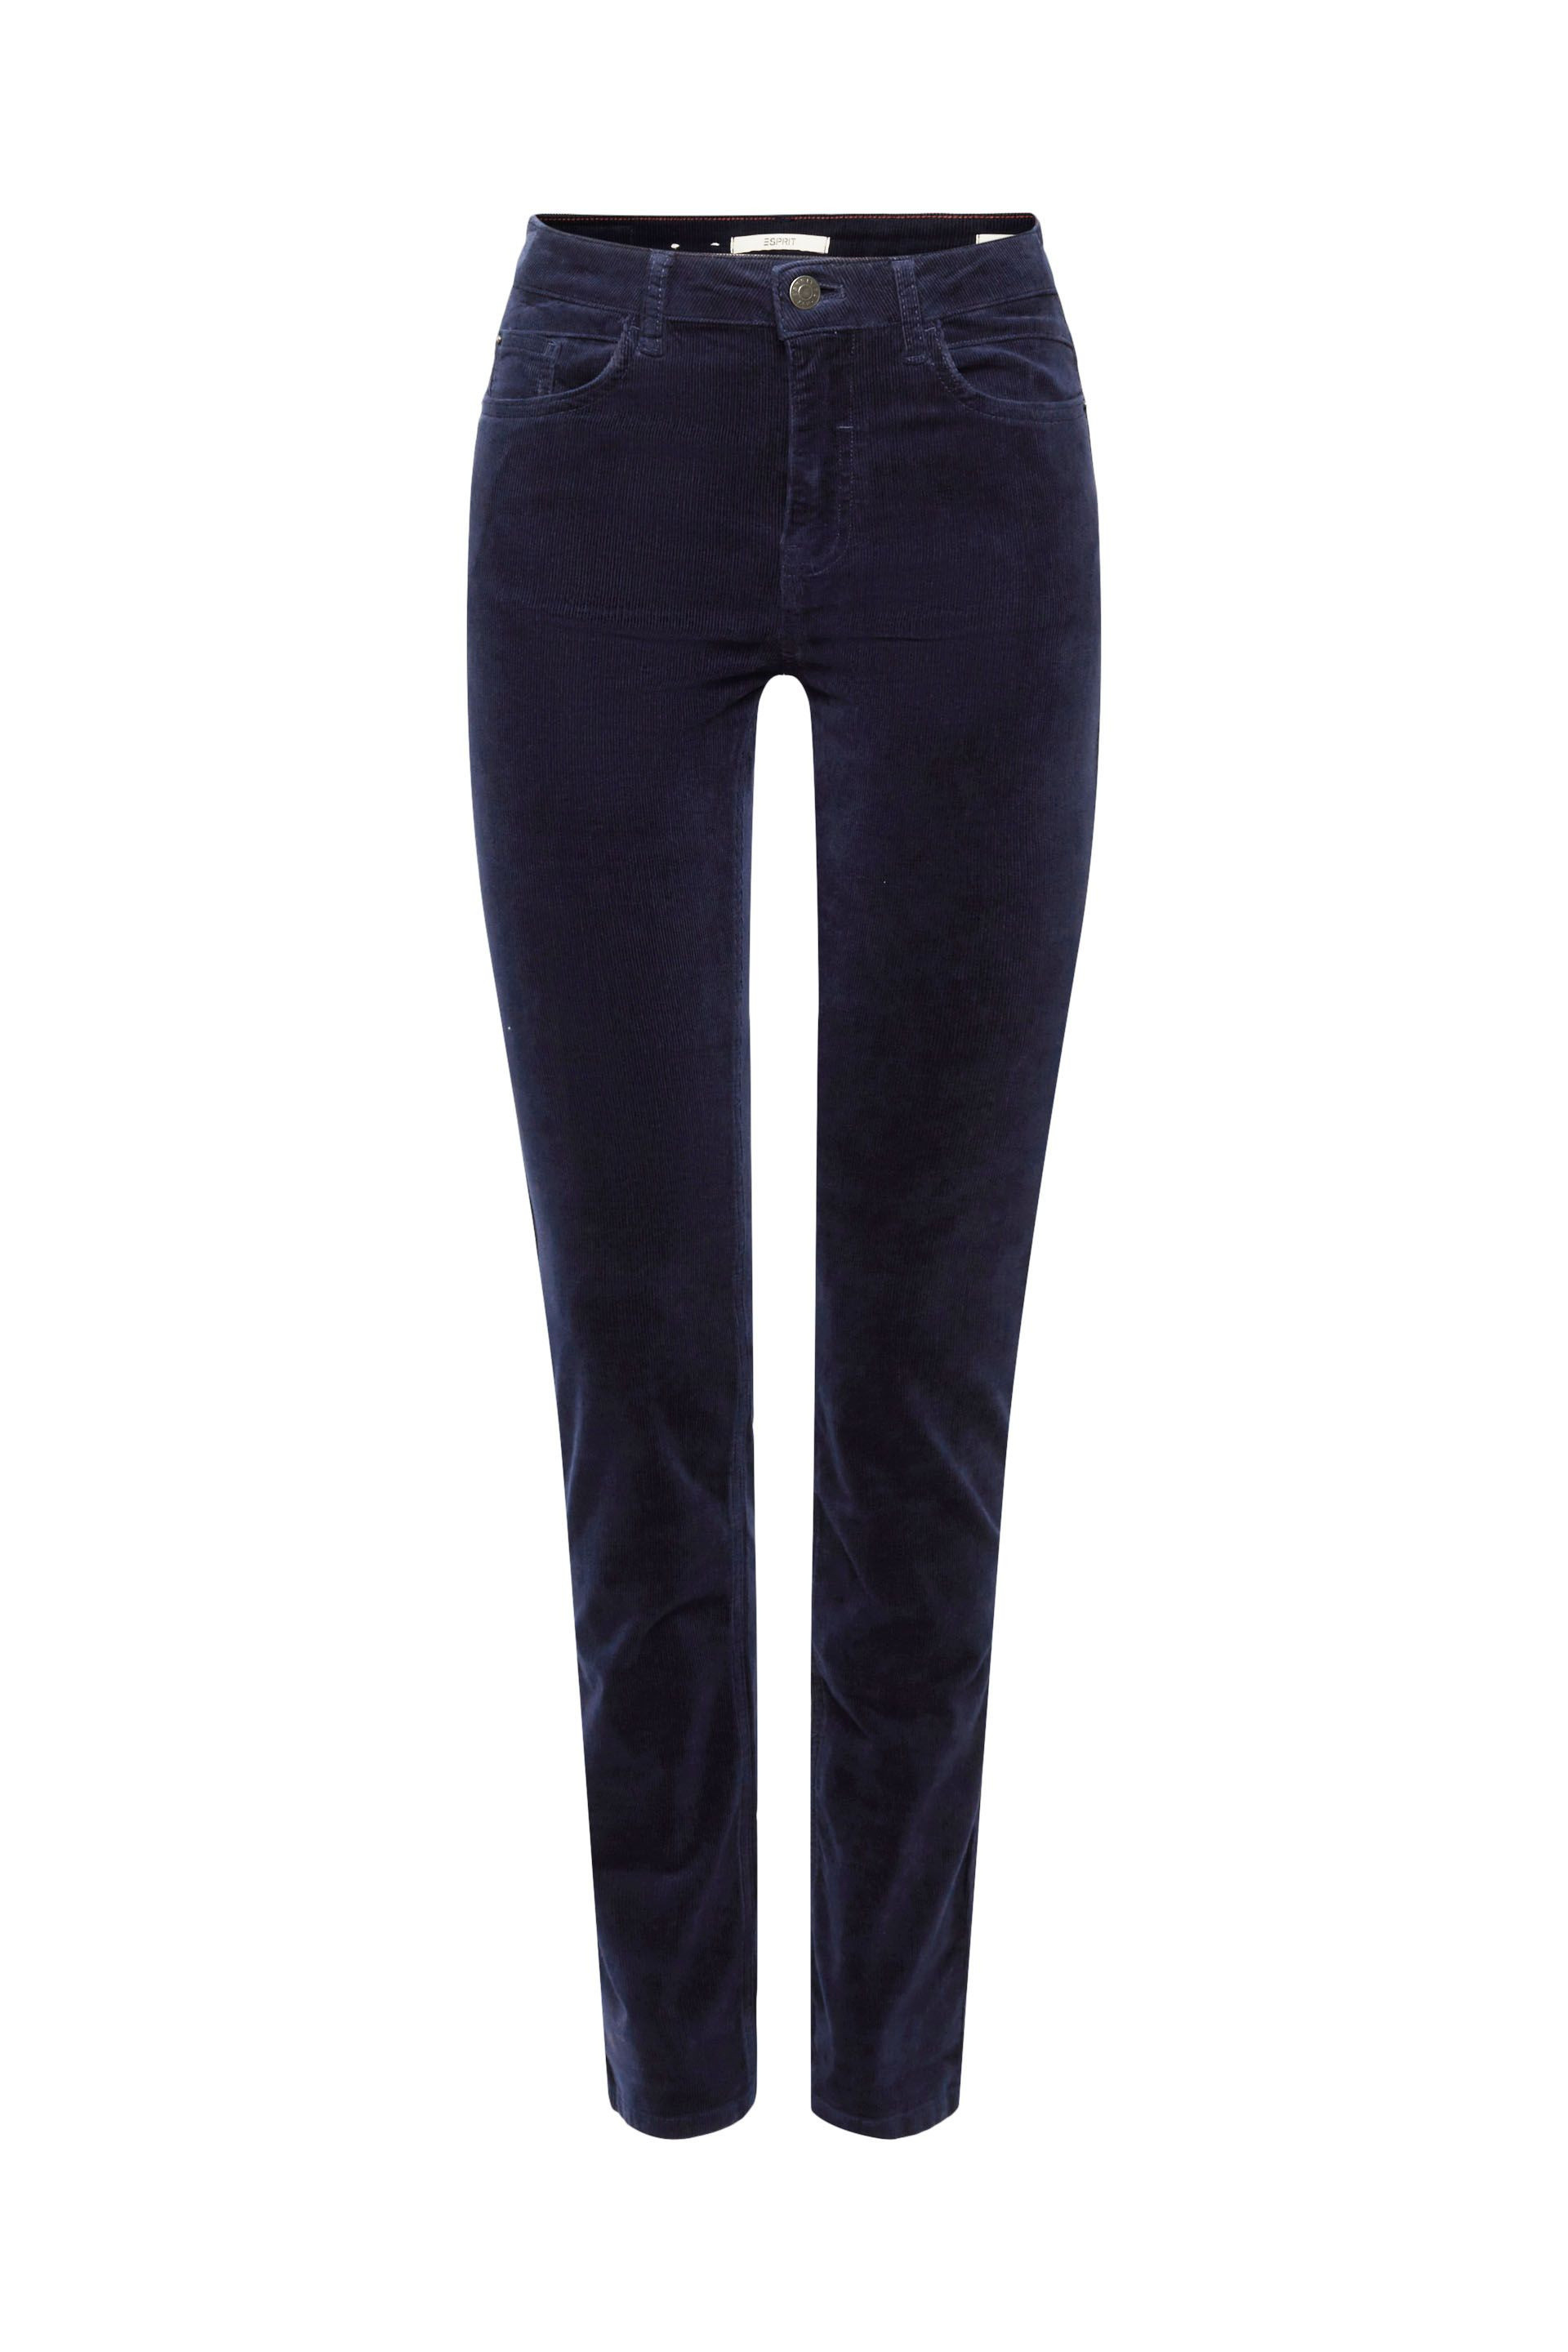 Corduroy trousers, Dark Blue, large image number 0